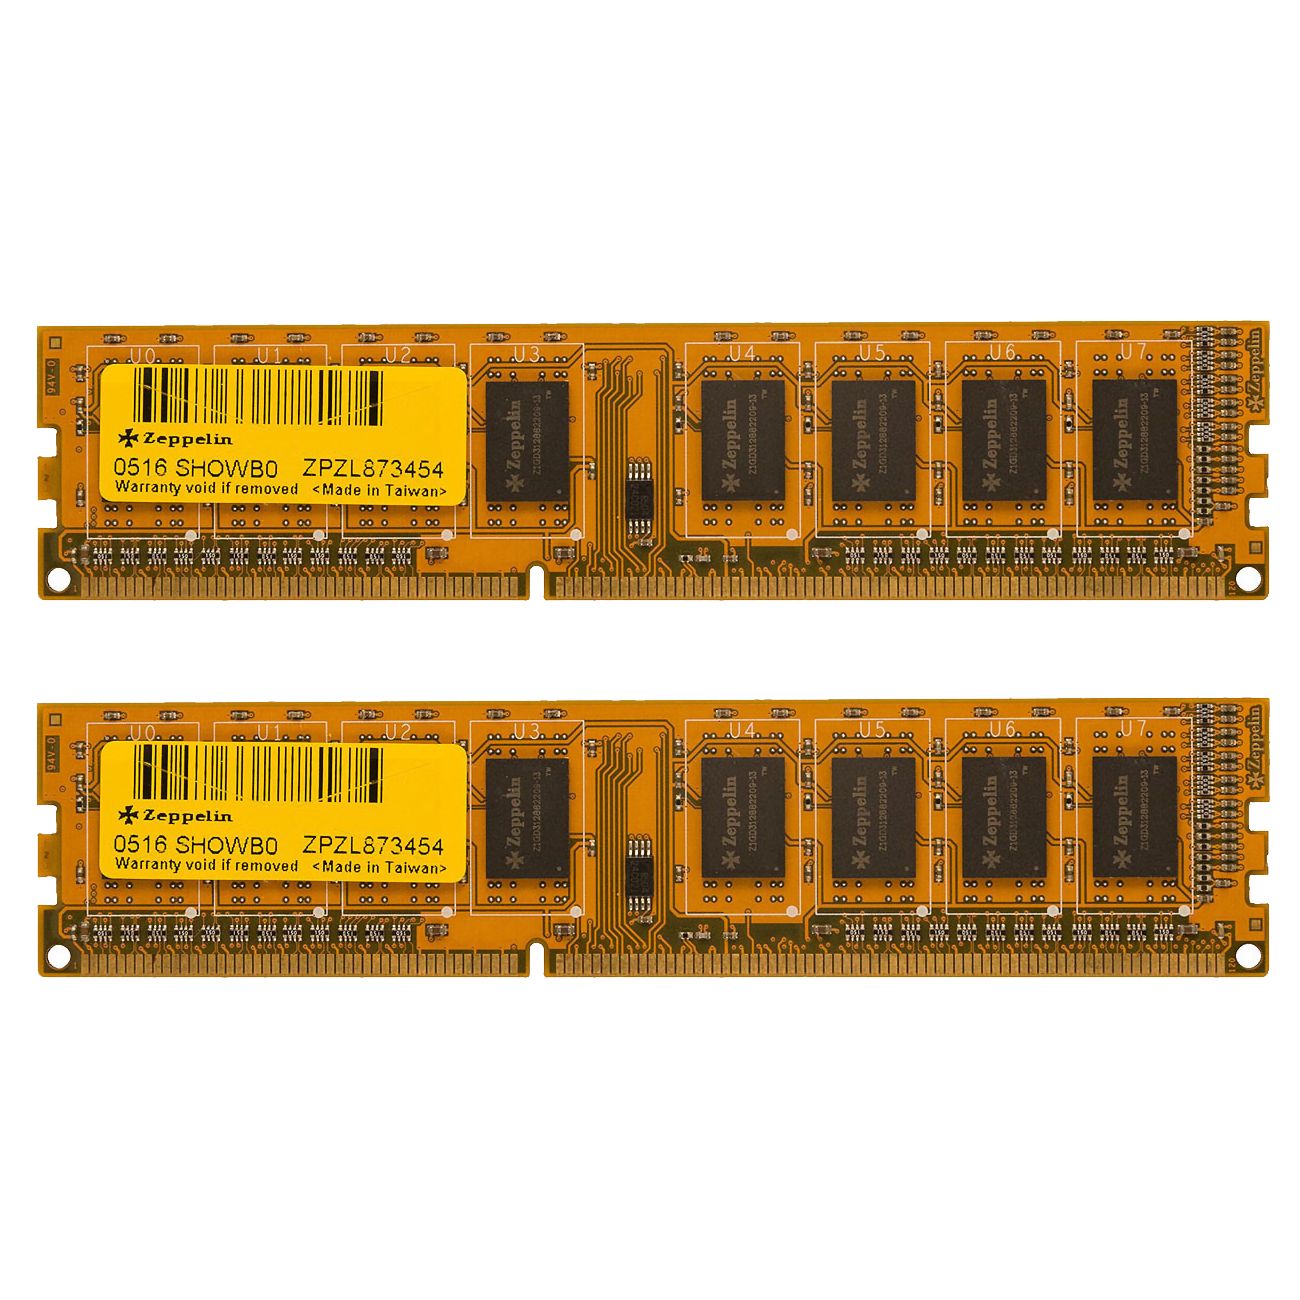 Memorie DDR  Zeppelin  DDR3  8GB frecventa 1333 Mhz (kit 2x 4GB) dual channel kit (retail) 